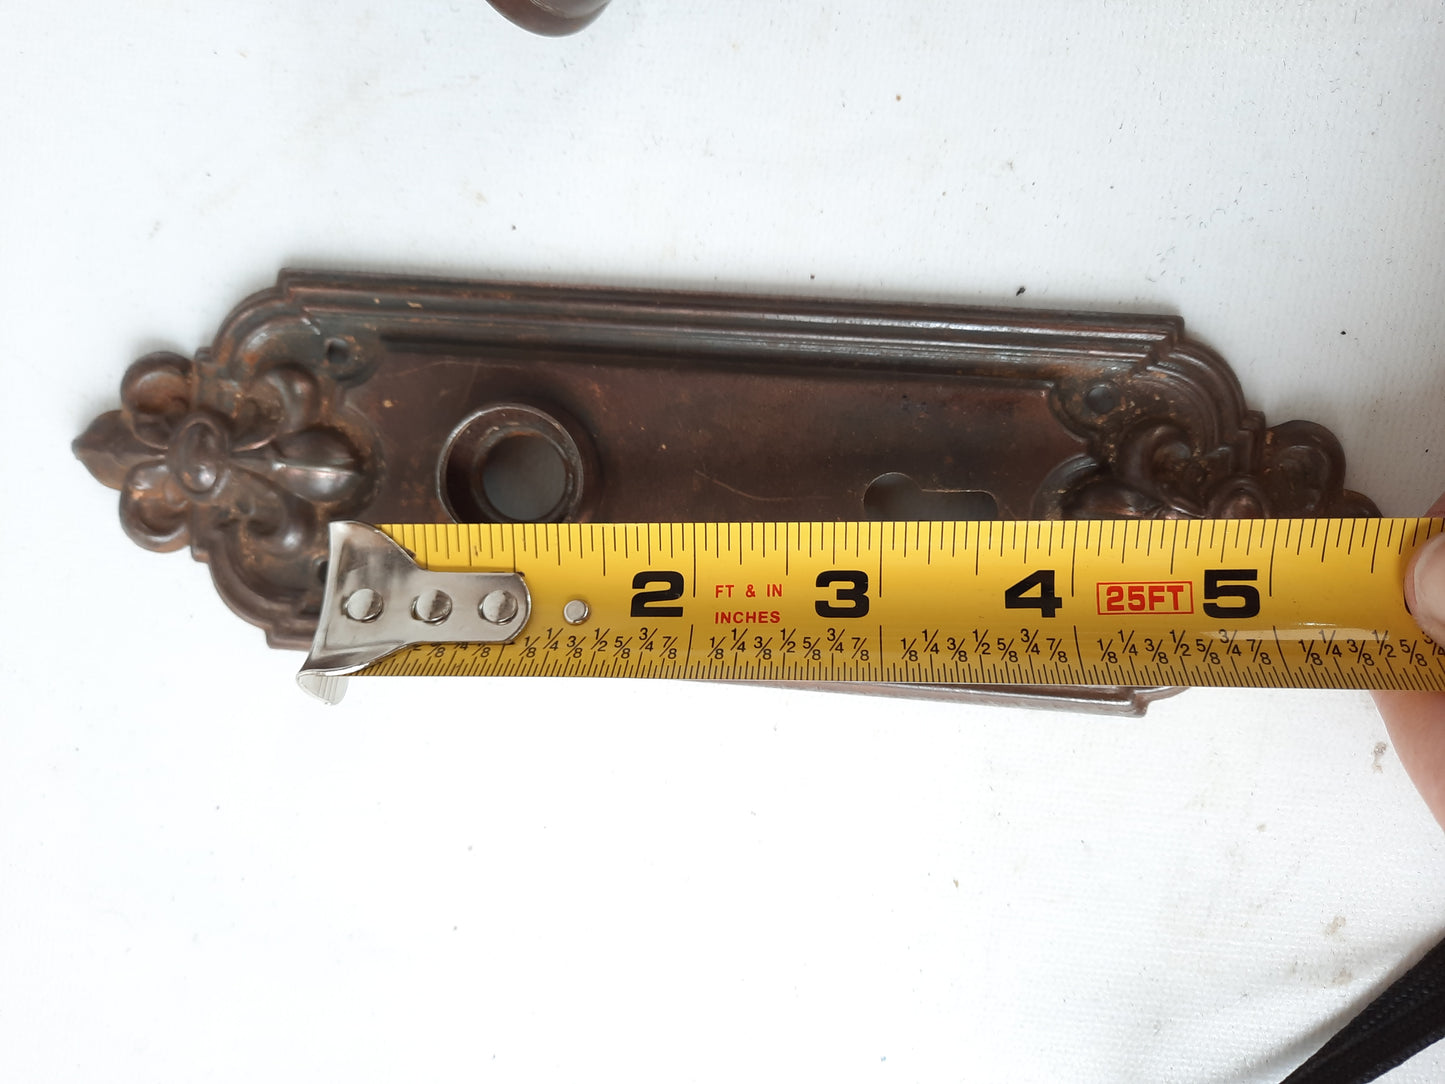 Flower Doorknob and Plates Set in Stamped Steel, 1900s Door Plate and Knob Hardware 030706